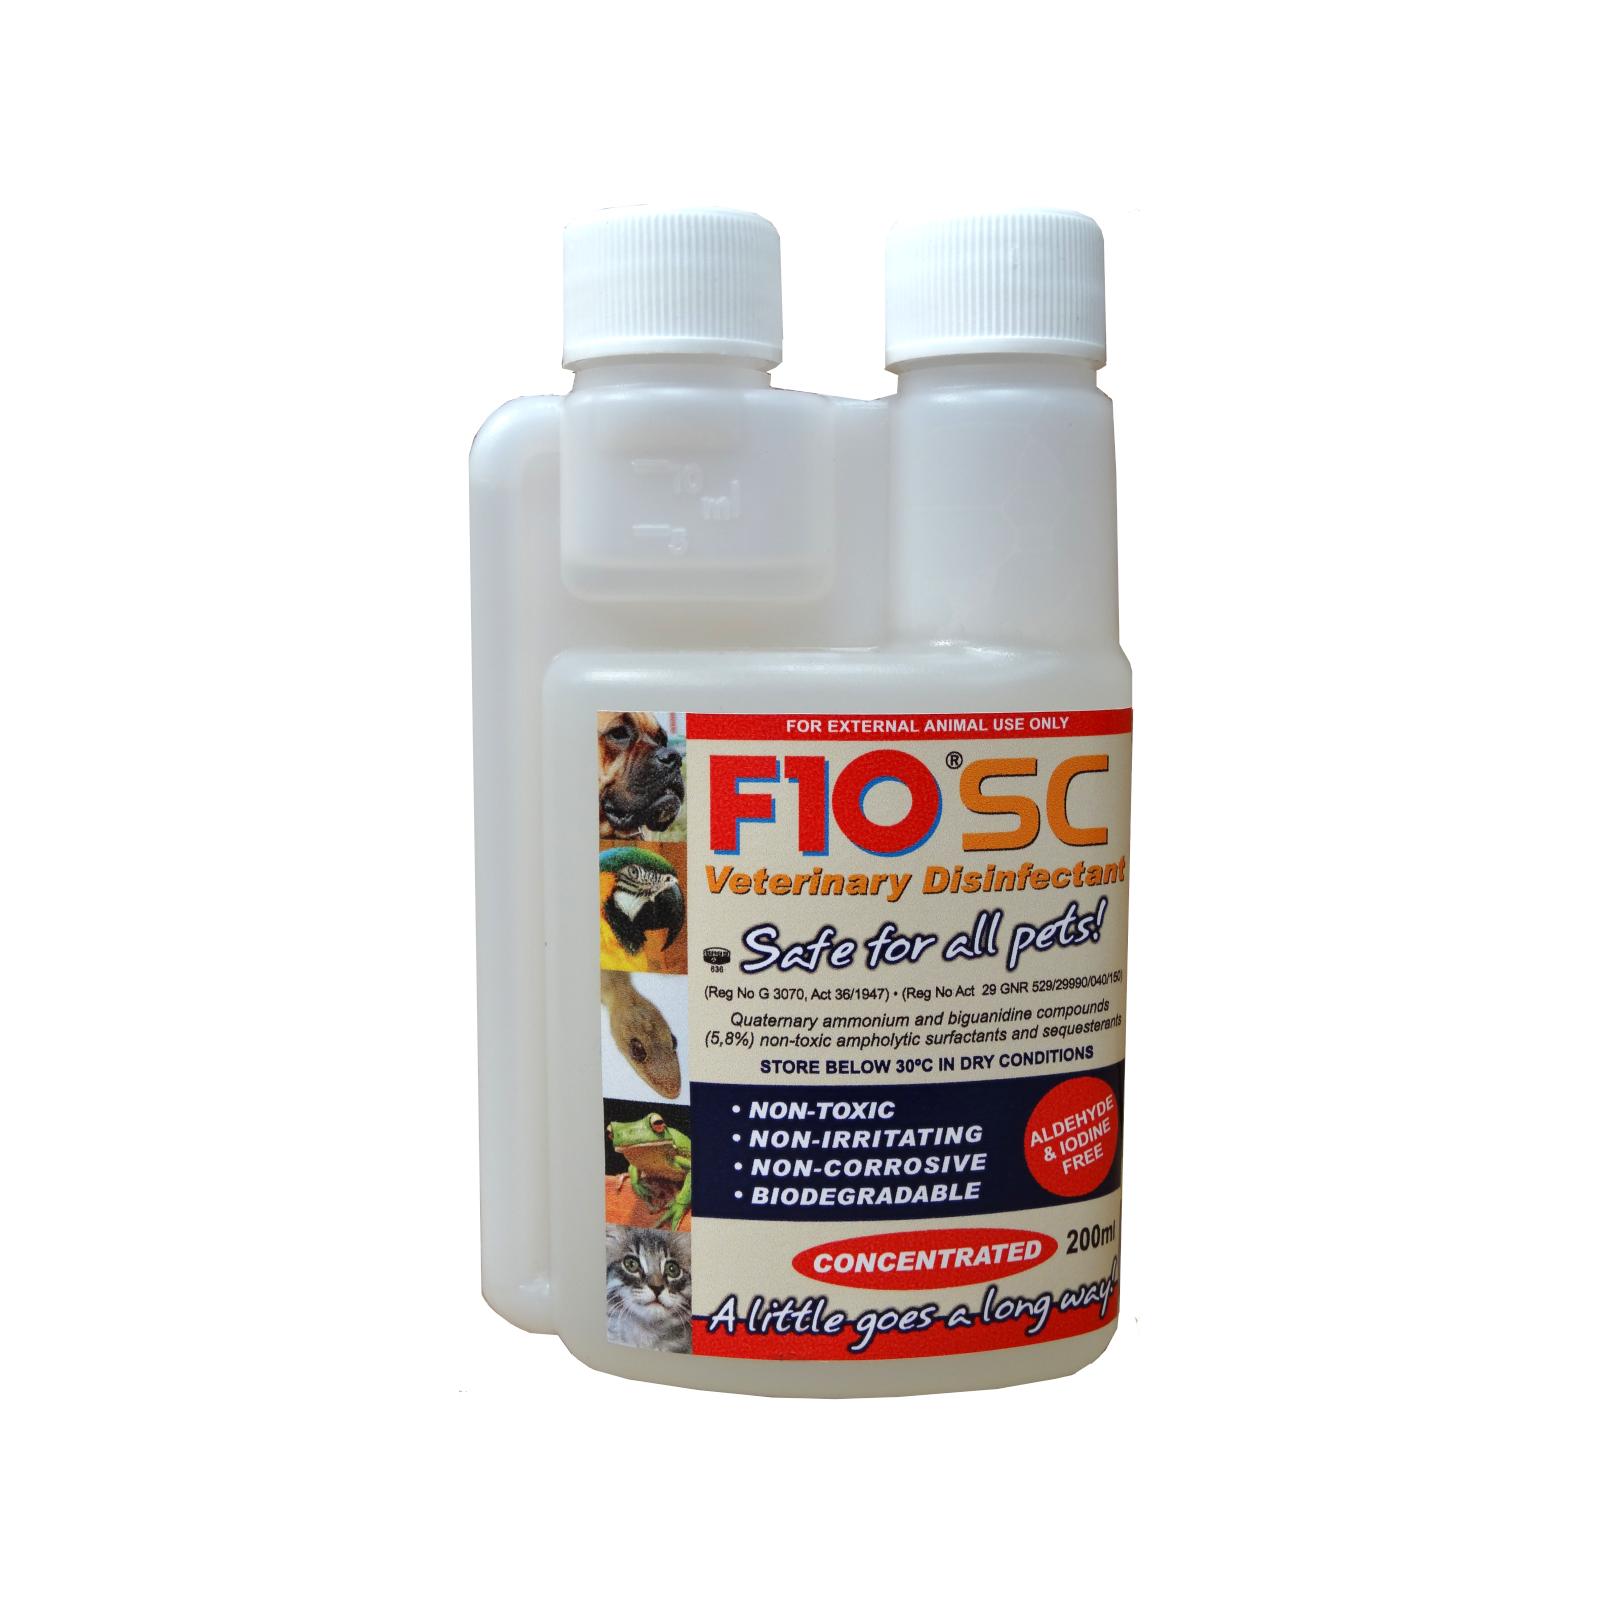 A 200ml bottle of F10SC Veterinary Disinfectant